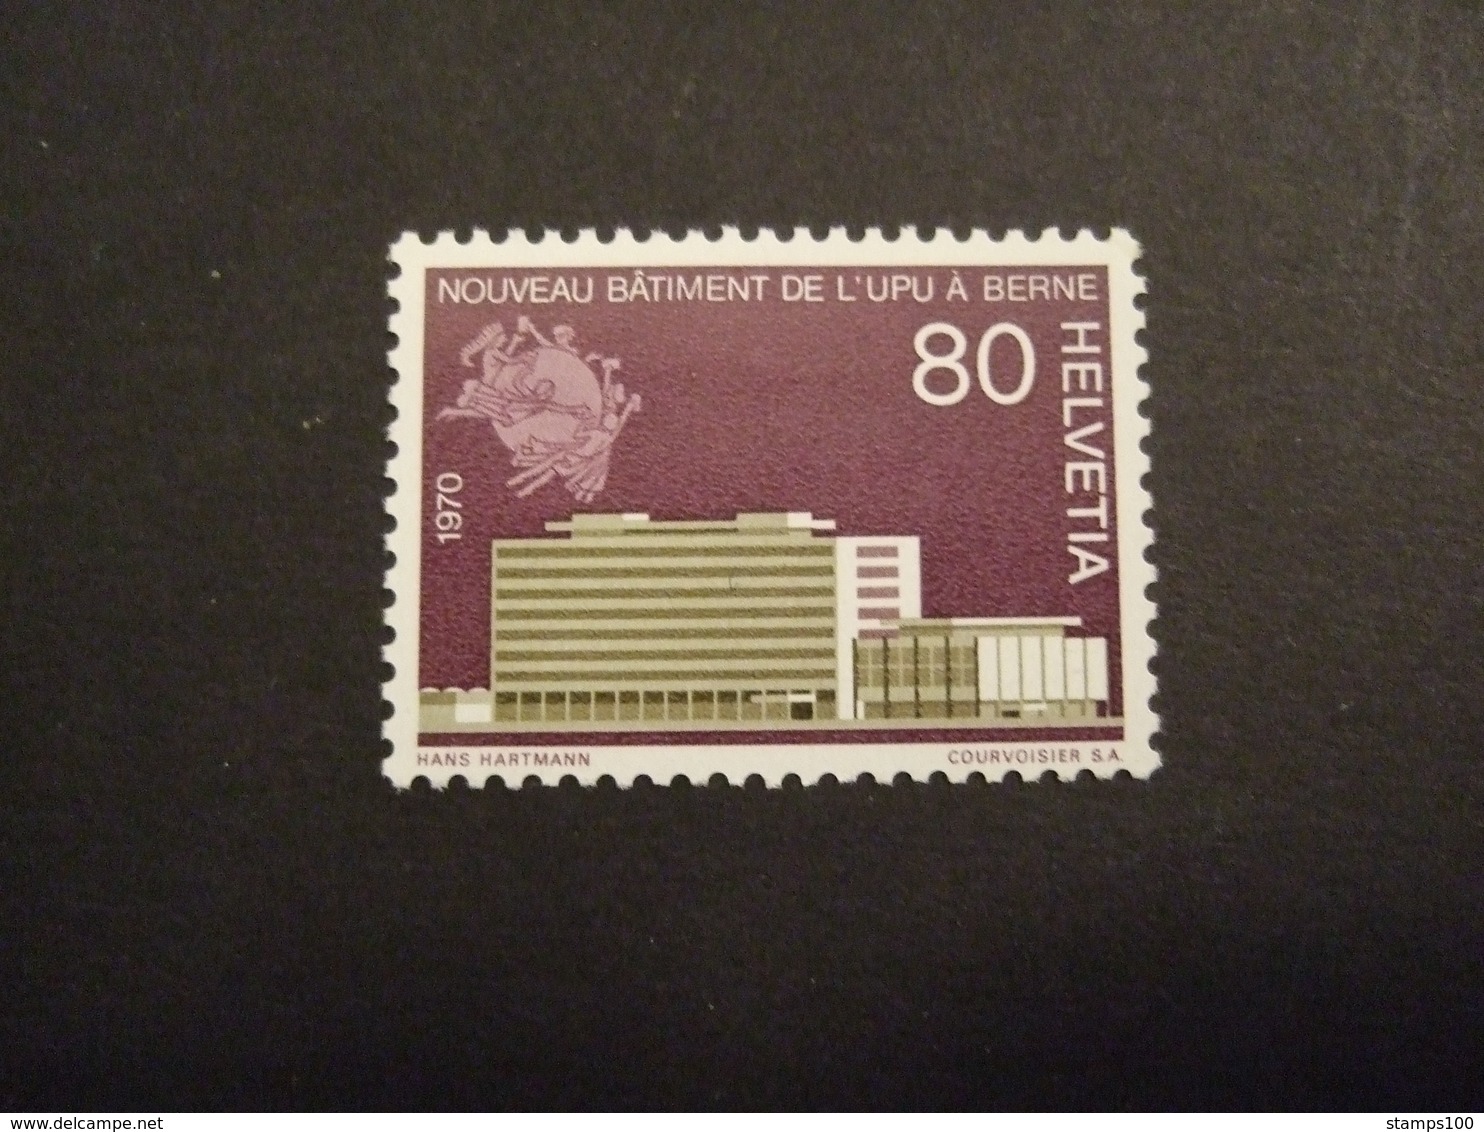 SWITZERLAND. UPU. 1970. BUILDING. MH ** (S26-nom) - UPU (Universal Postal Union)